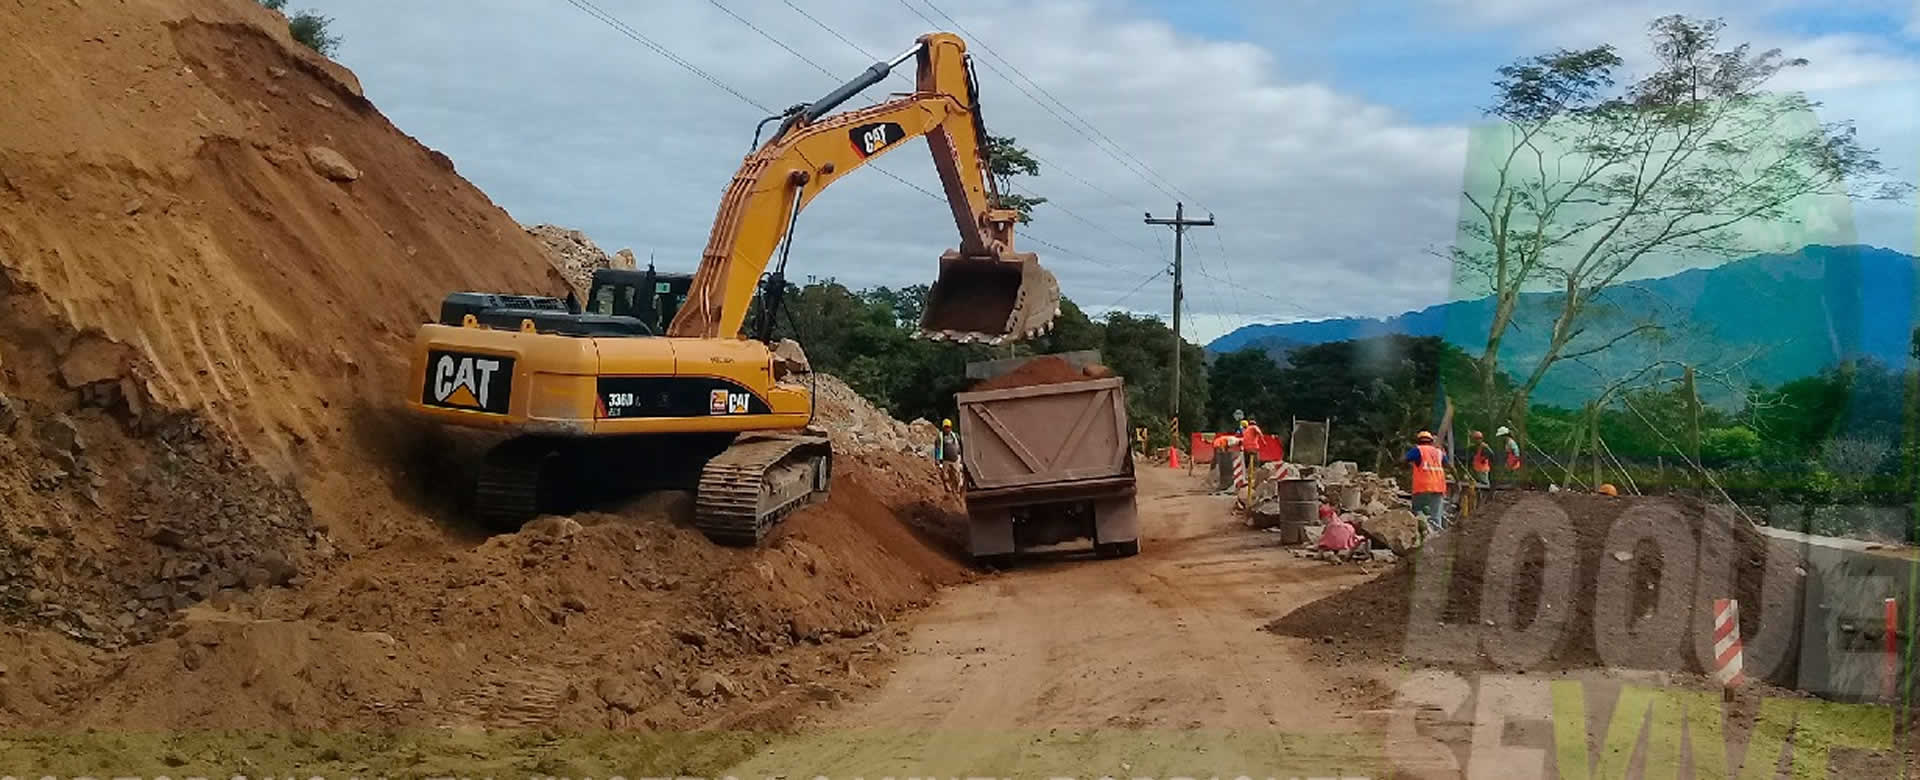 Continua construcción de carretera Pantama Wiwili en Jinotega